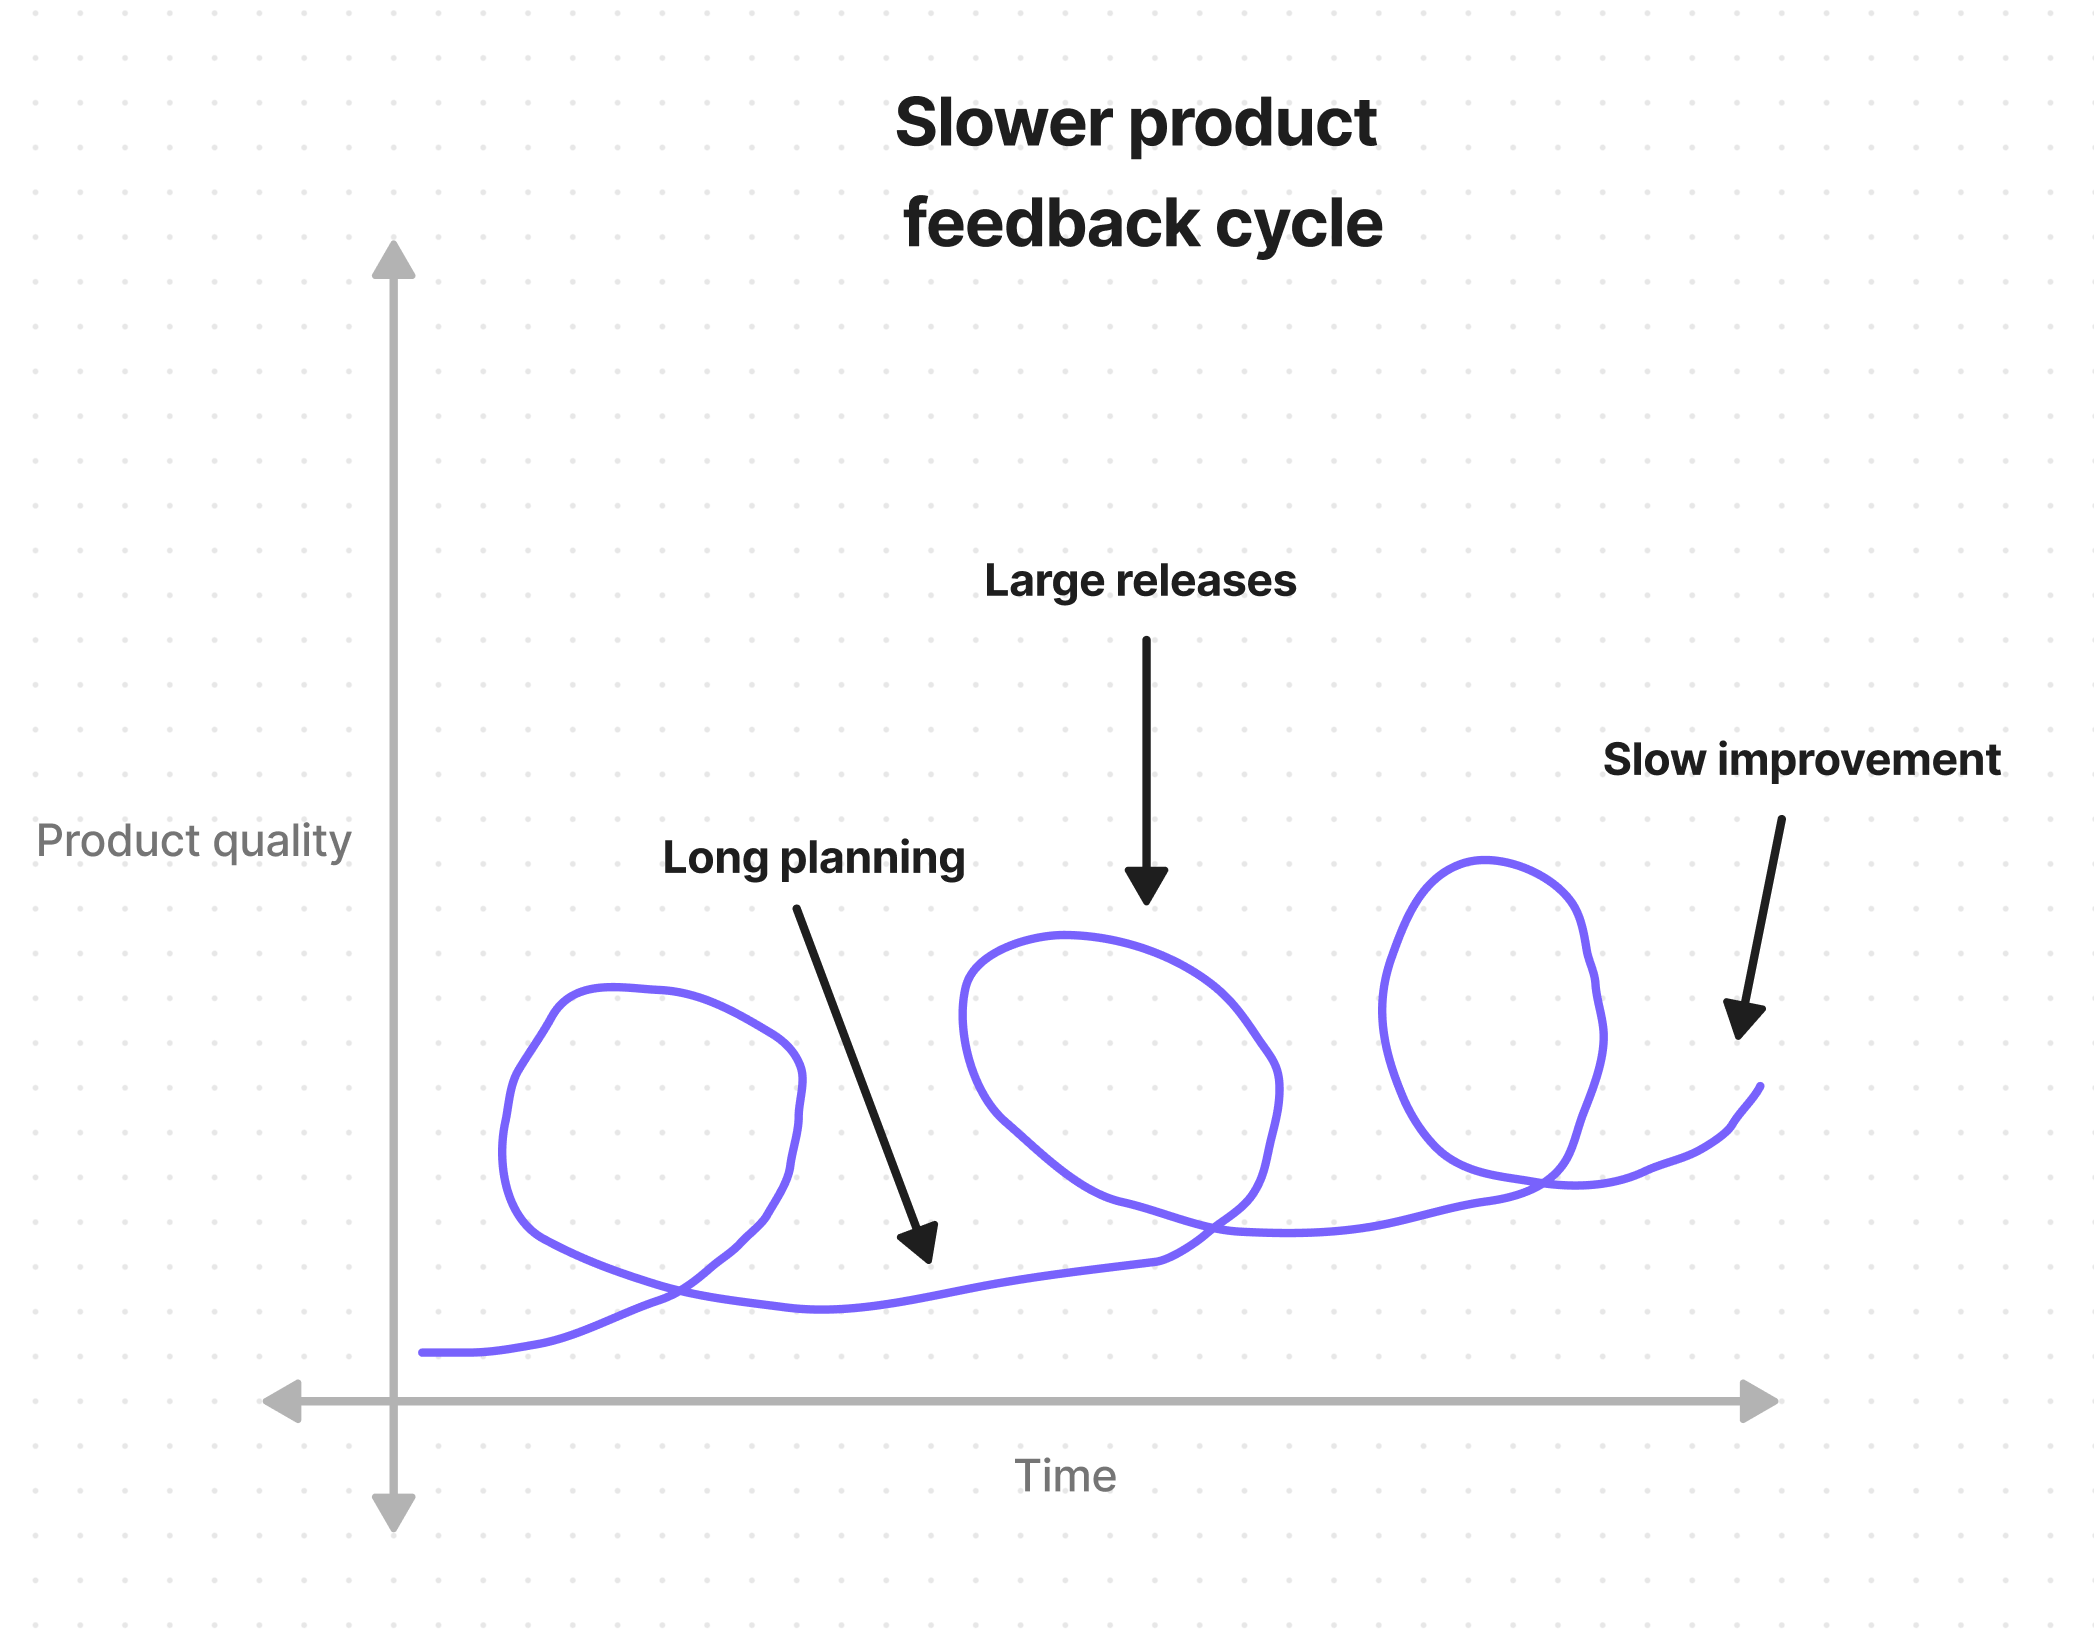 Slower feedback cycles